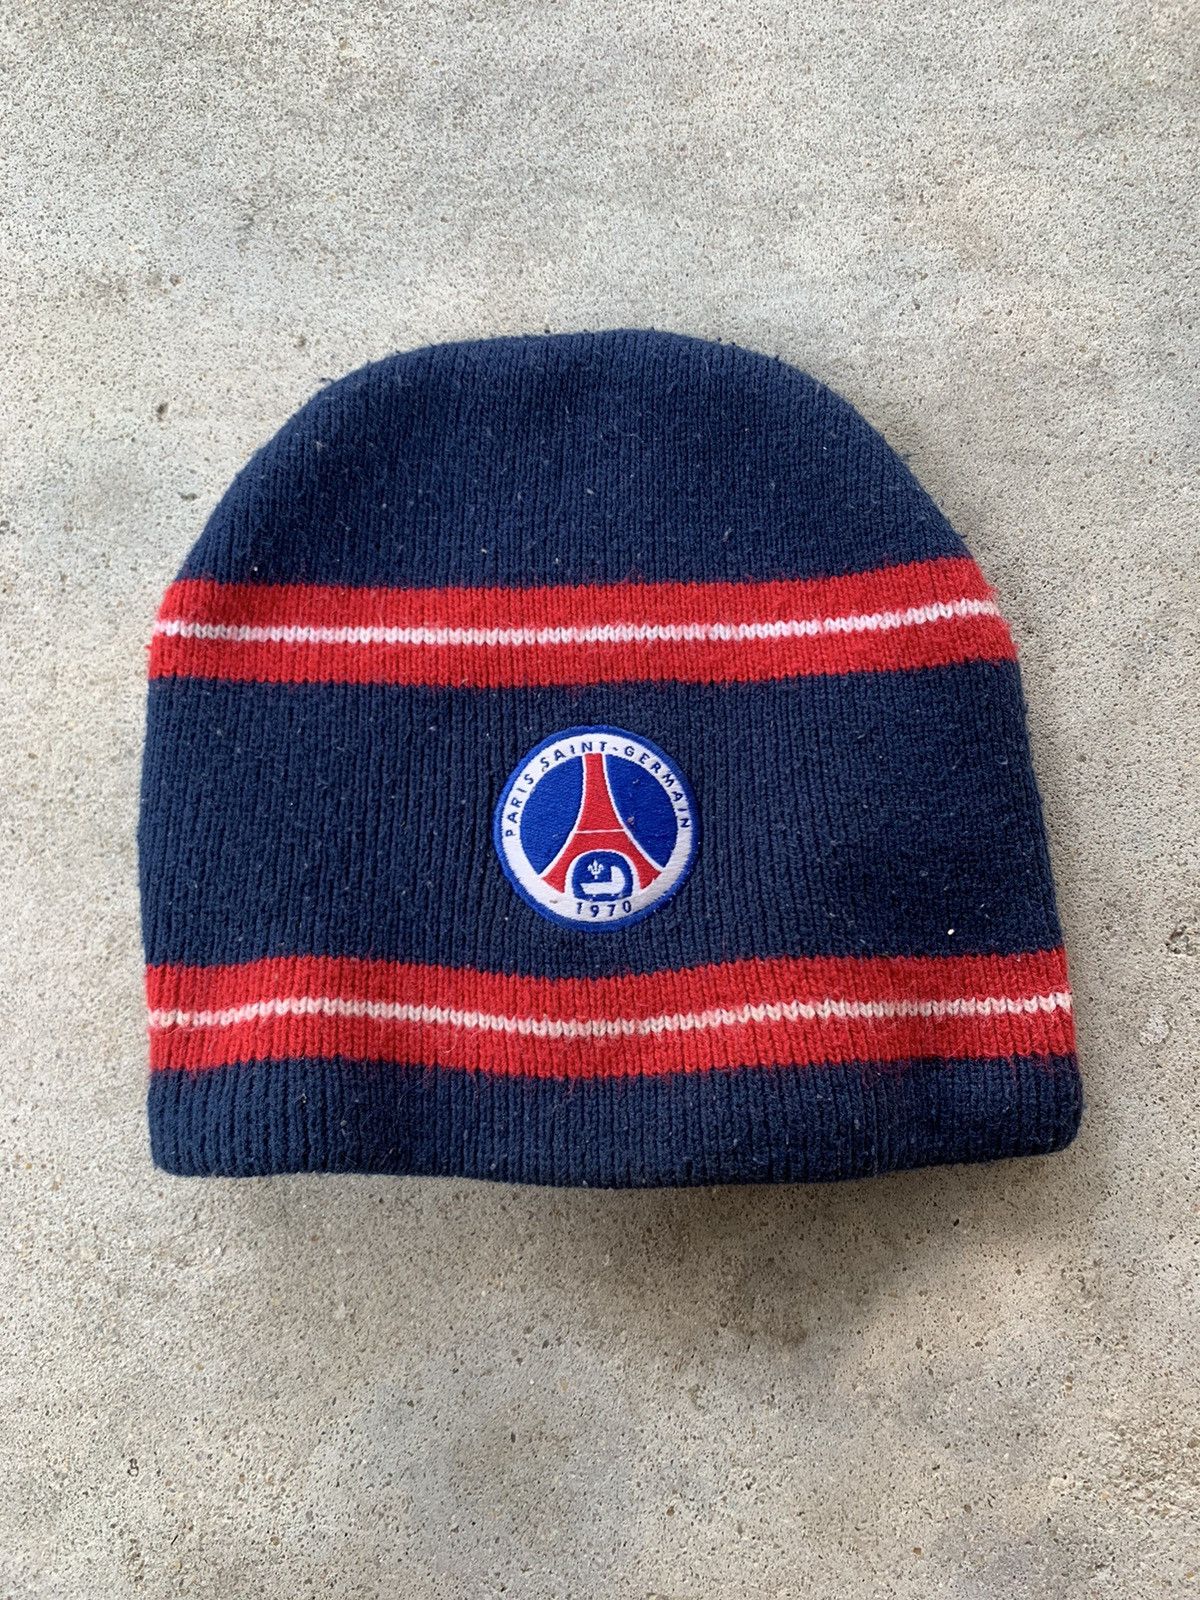 VINTAGE NIKE PSG Paris Saint Germain Beanie Football Hat - 1